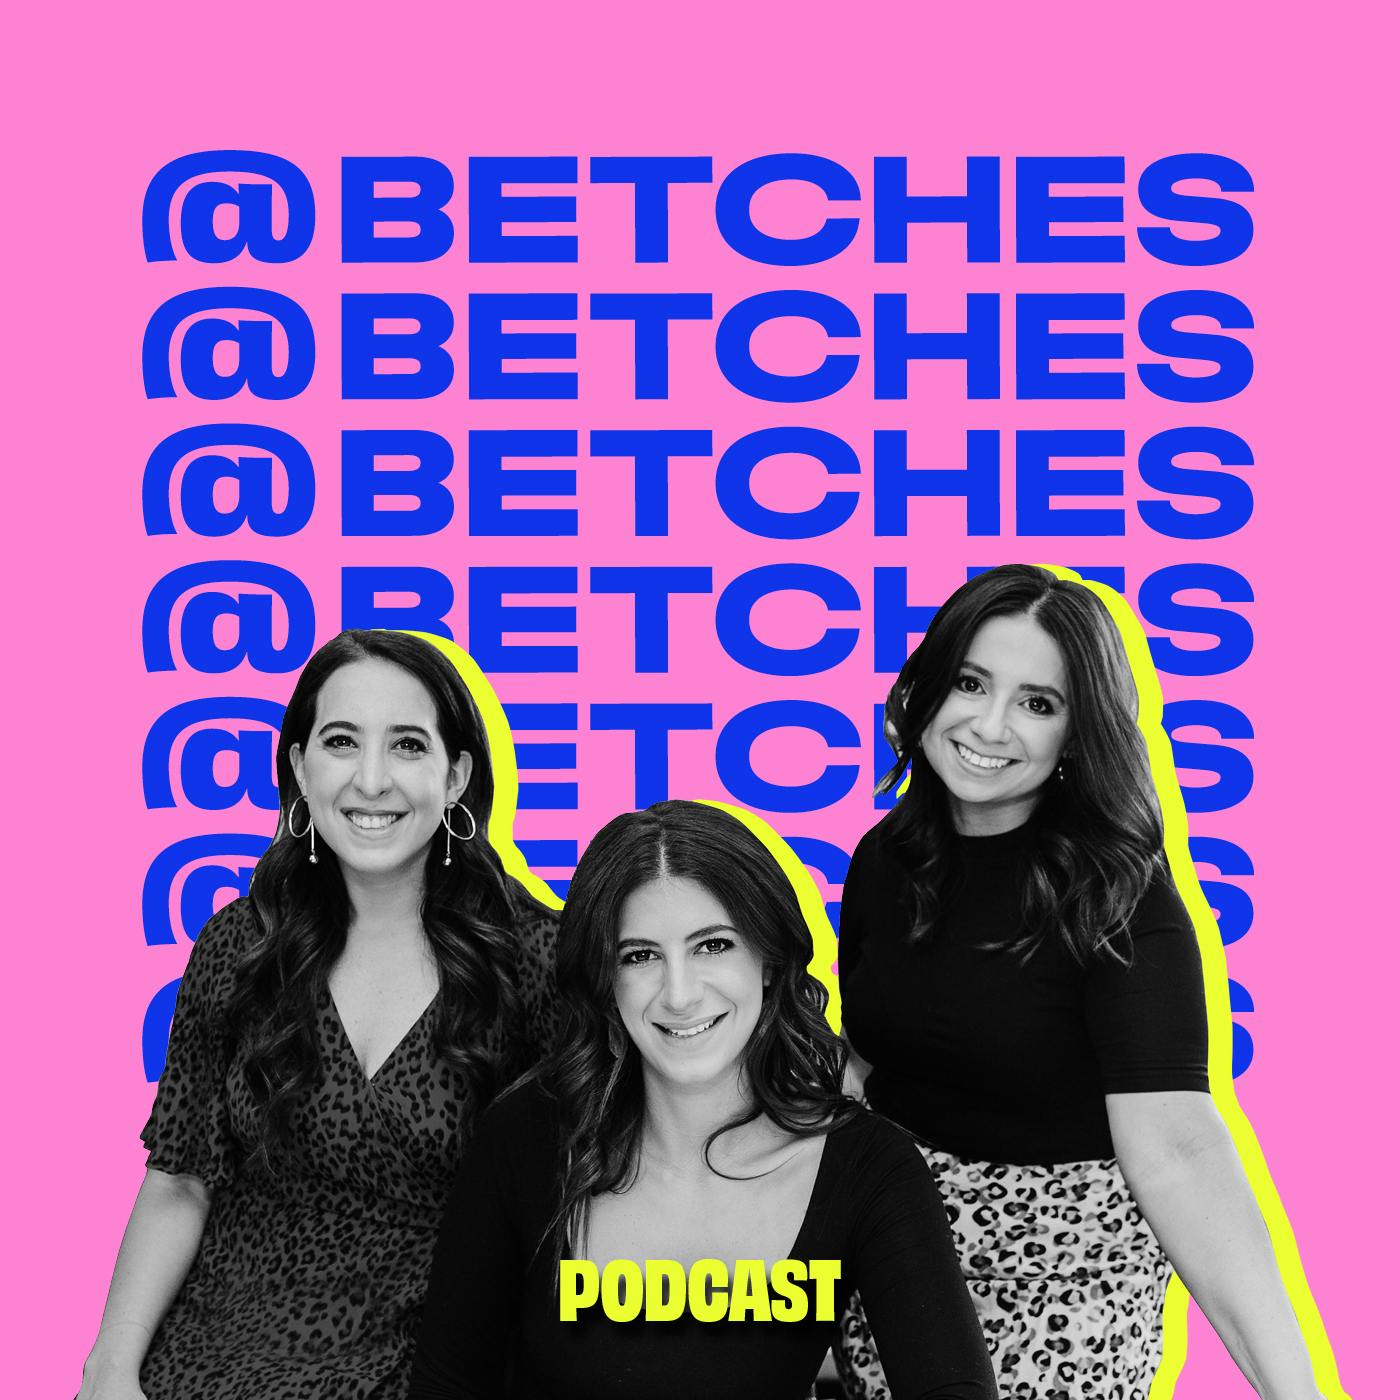 Betches - Podcast Addict